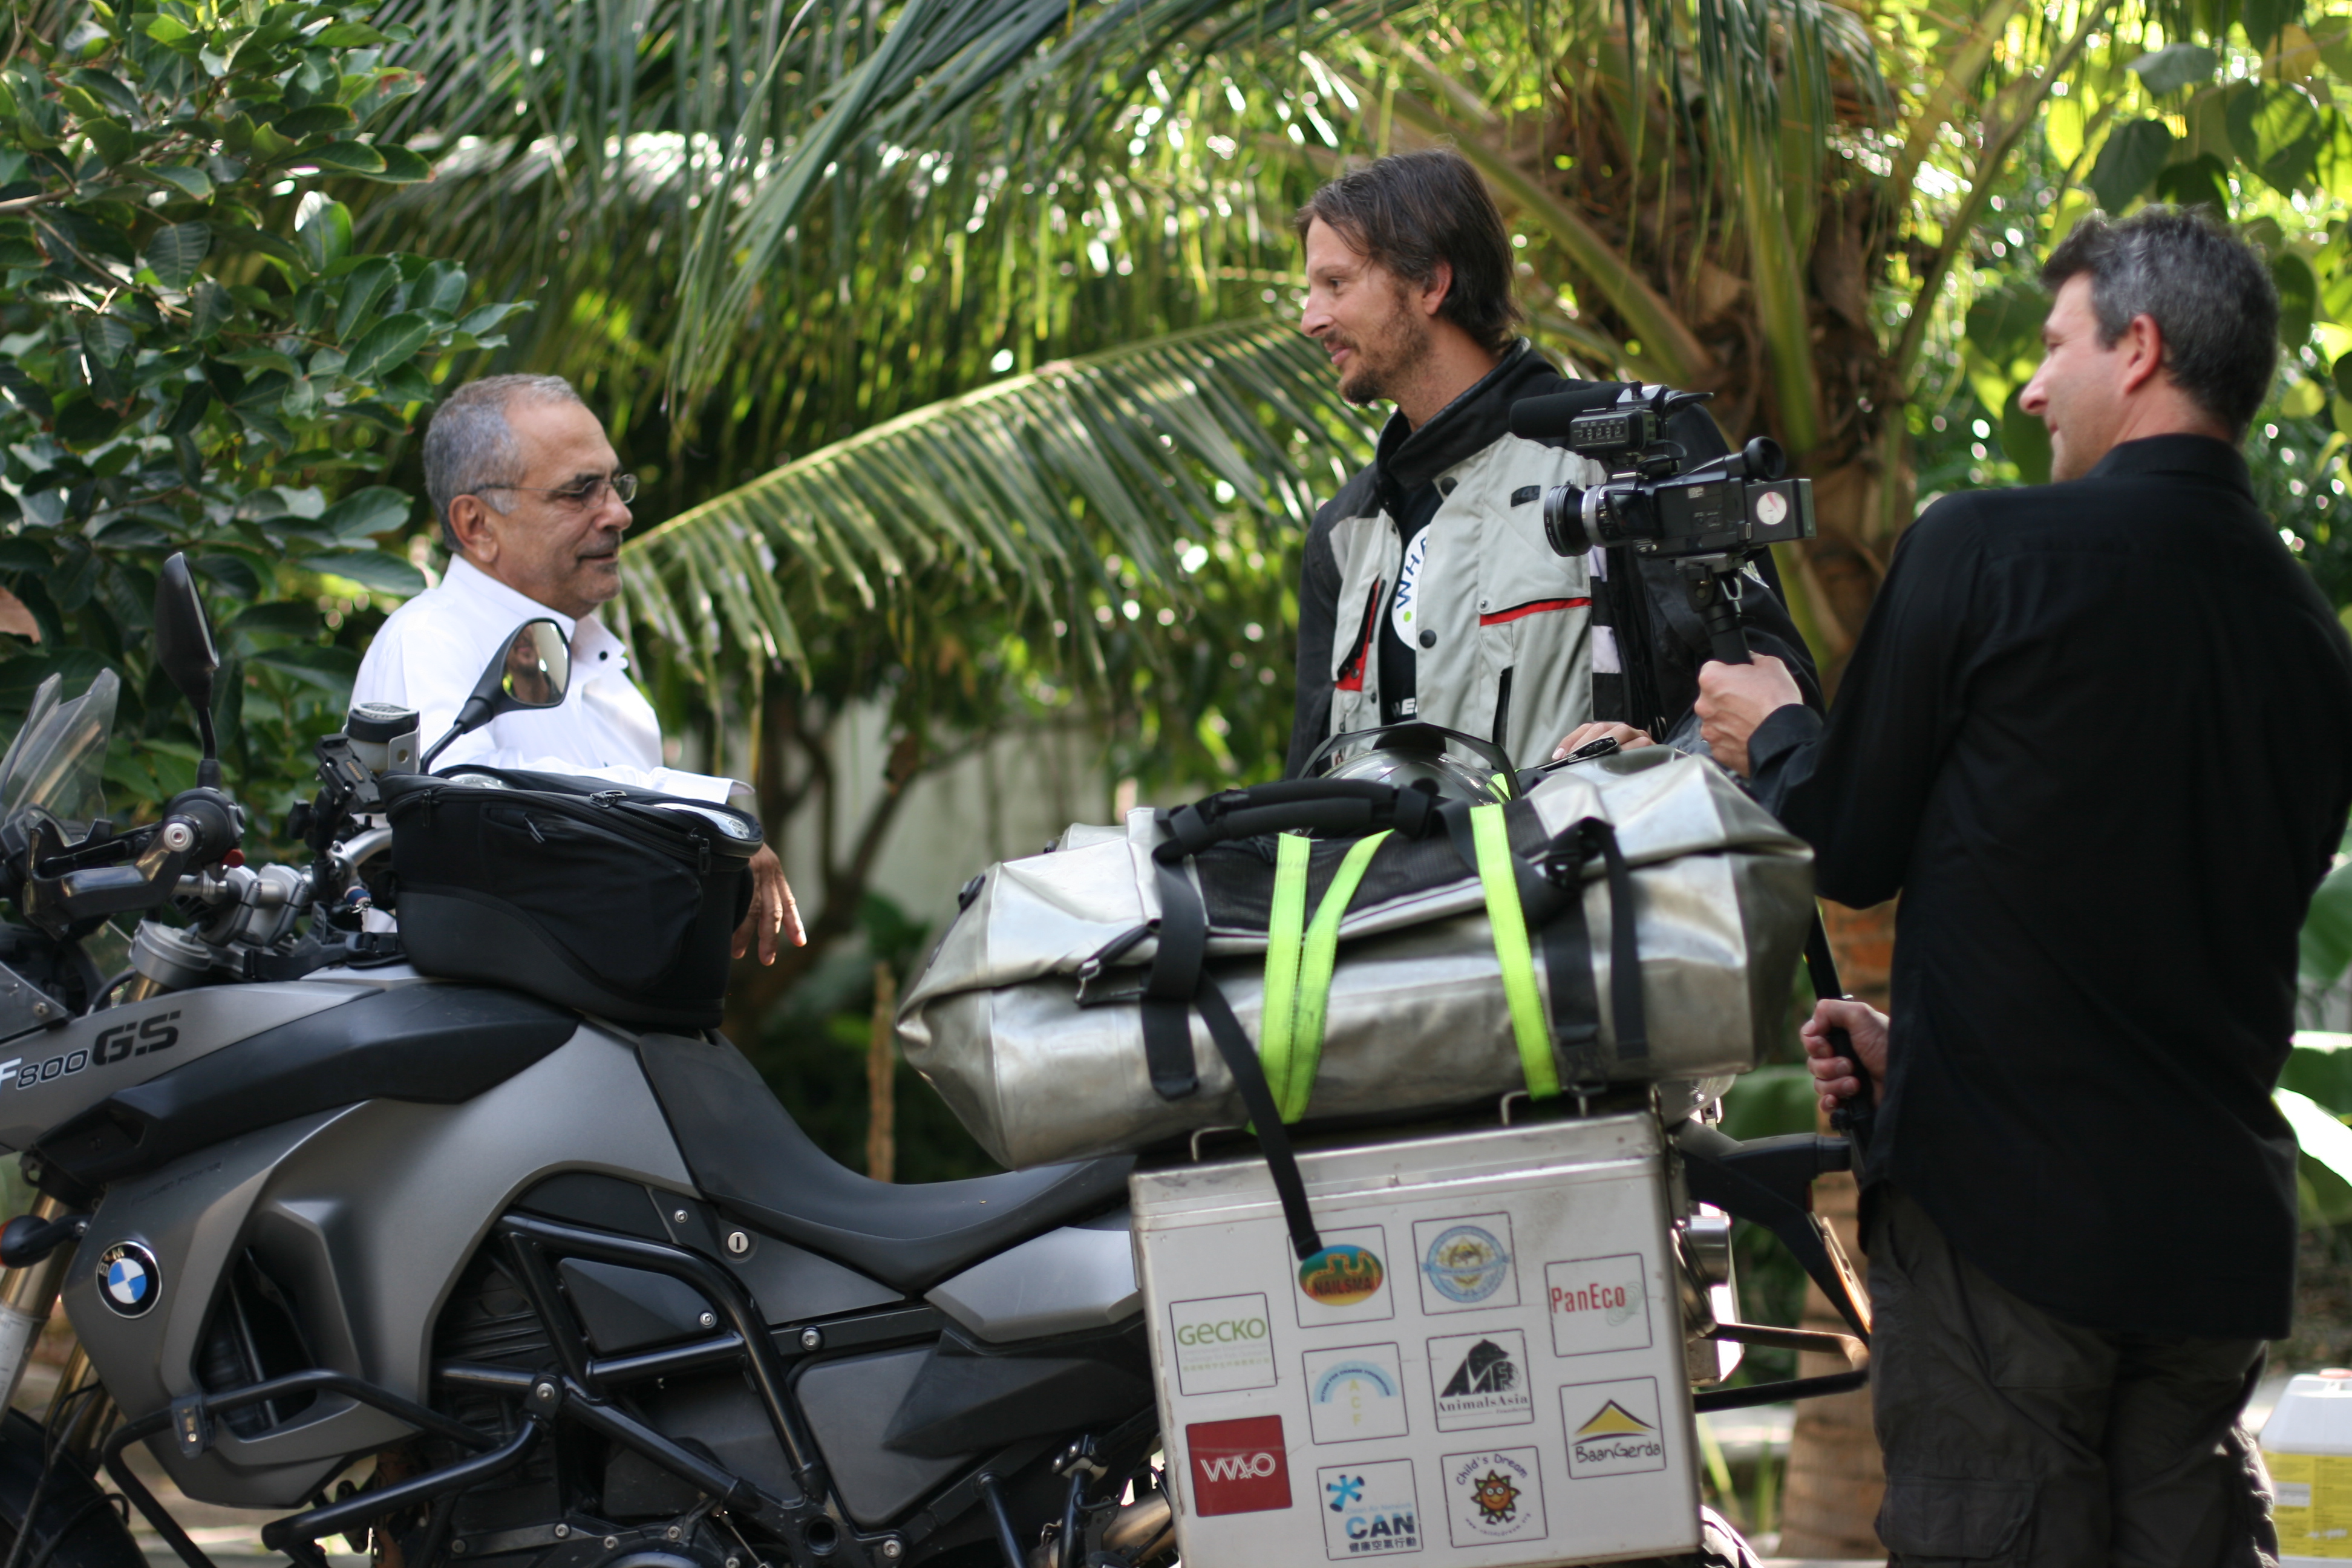 Filming with East Timor President - Jose Ramos Horta for Wheel2Wheel